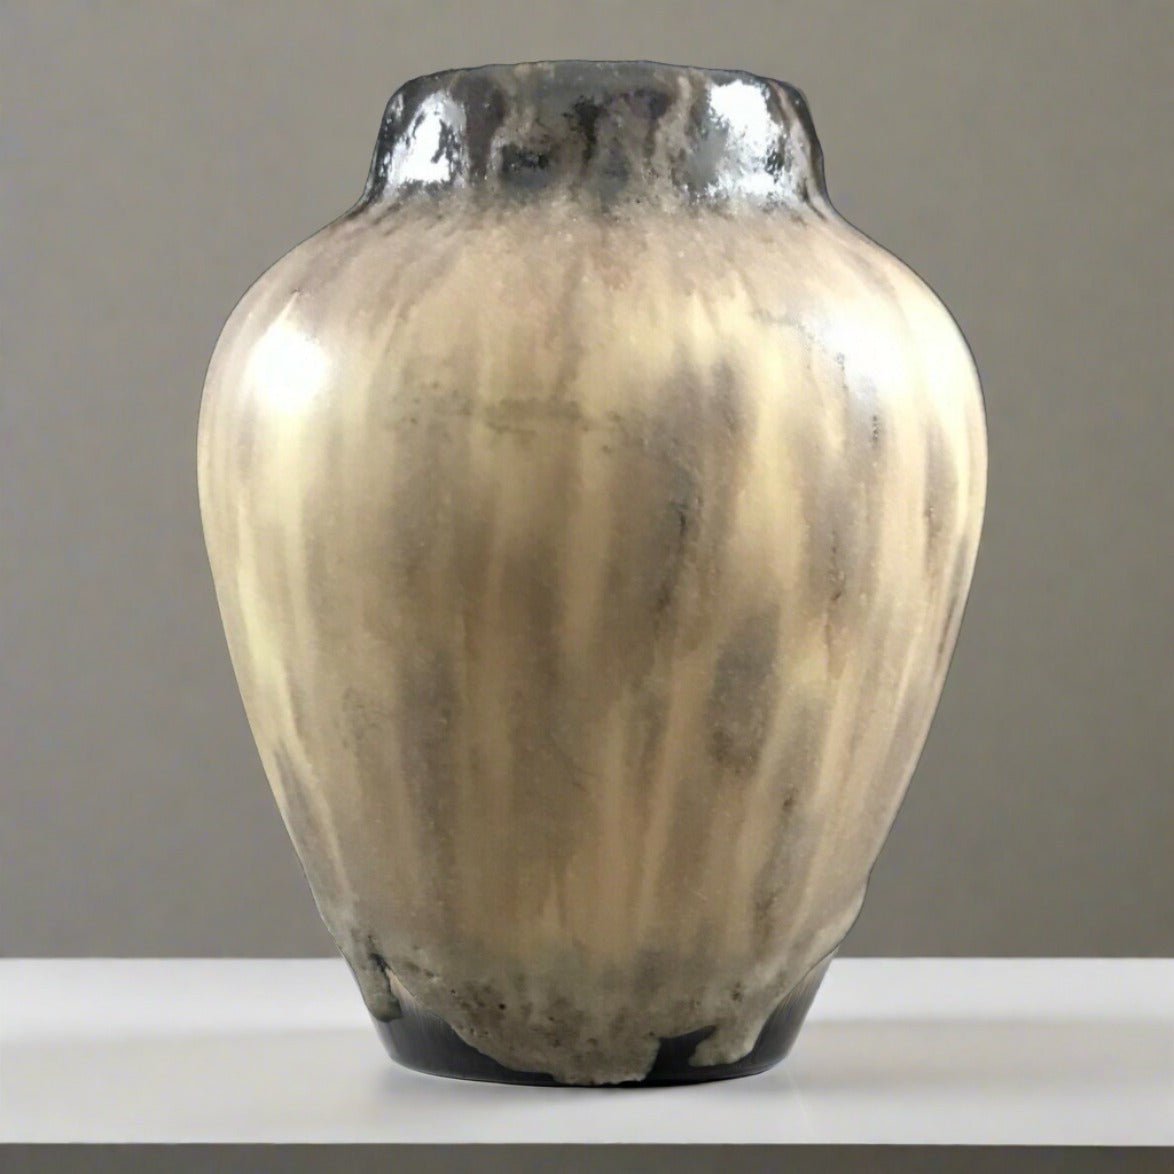 Rare Style Art Studio Pottery Tan Brown Black Drip Glaze Bud Vase - HUNTEDFOX